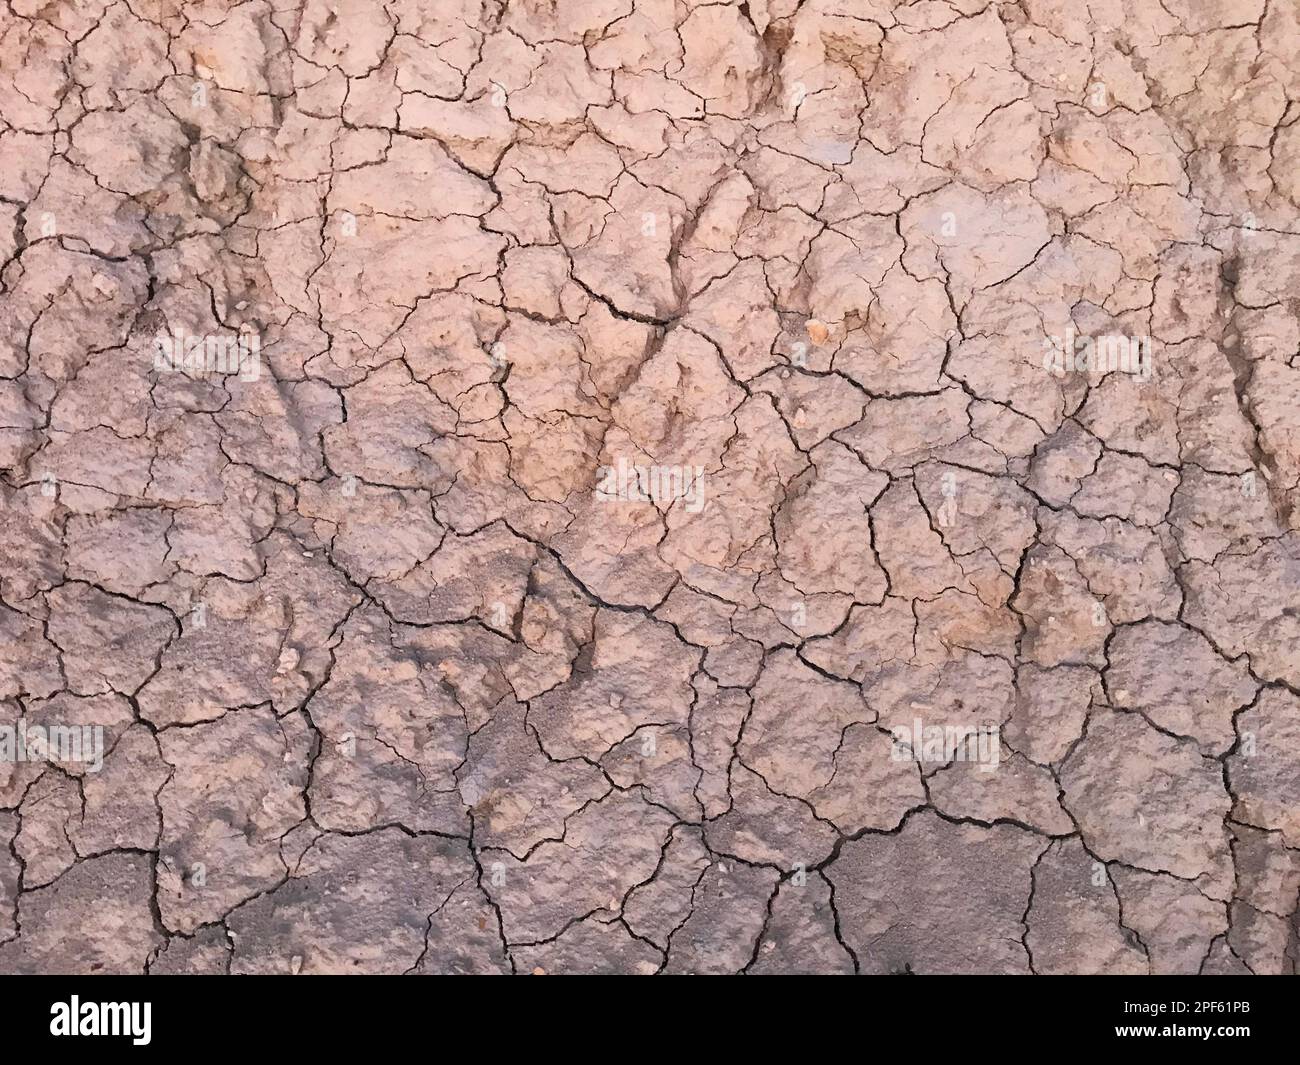 Dürrefelddetails in der Natur. Stockfoto